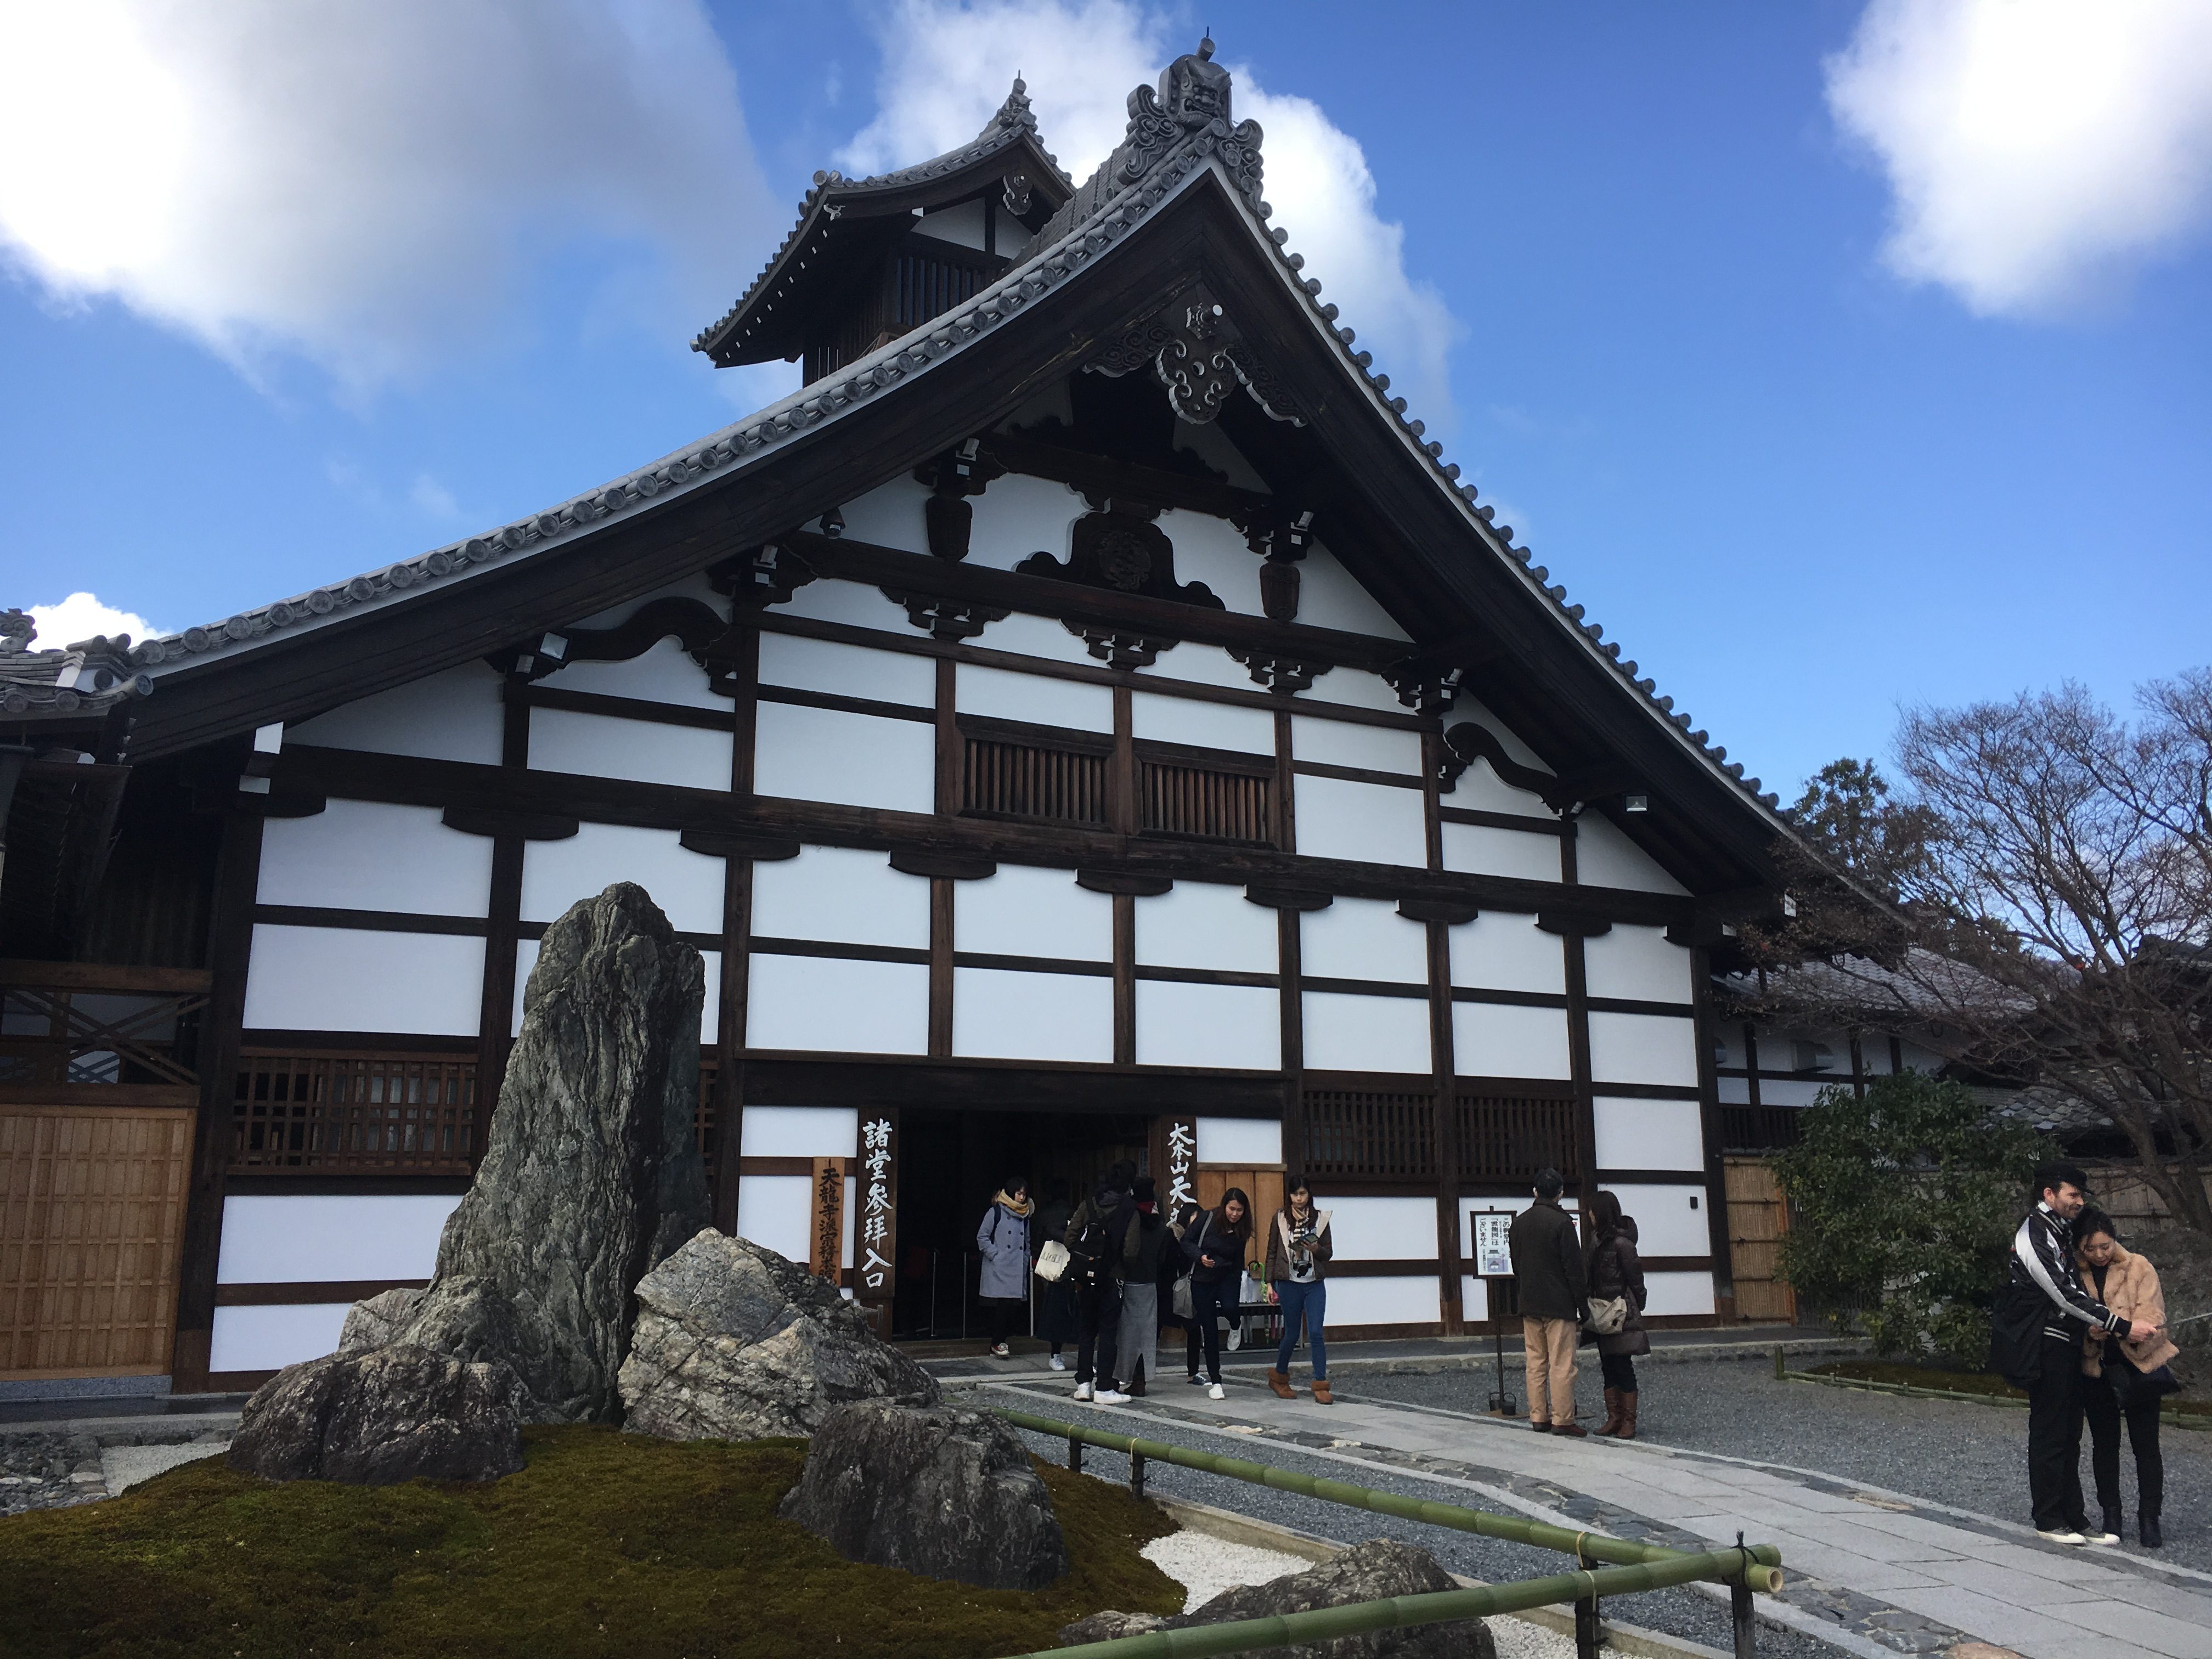 Tenryu-ji Temple of Kyoto